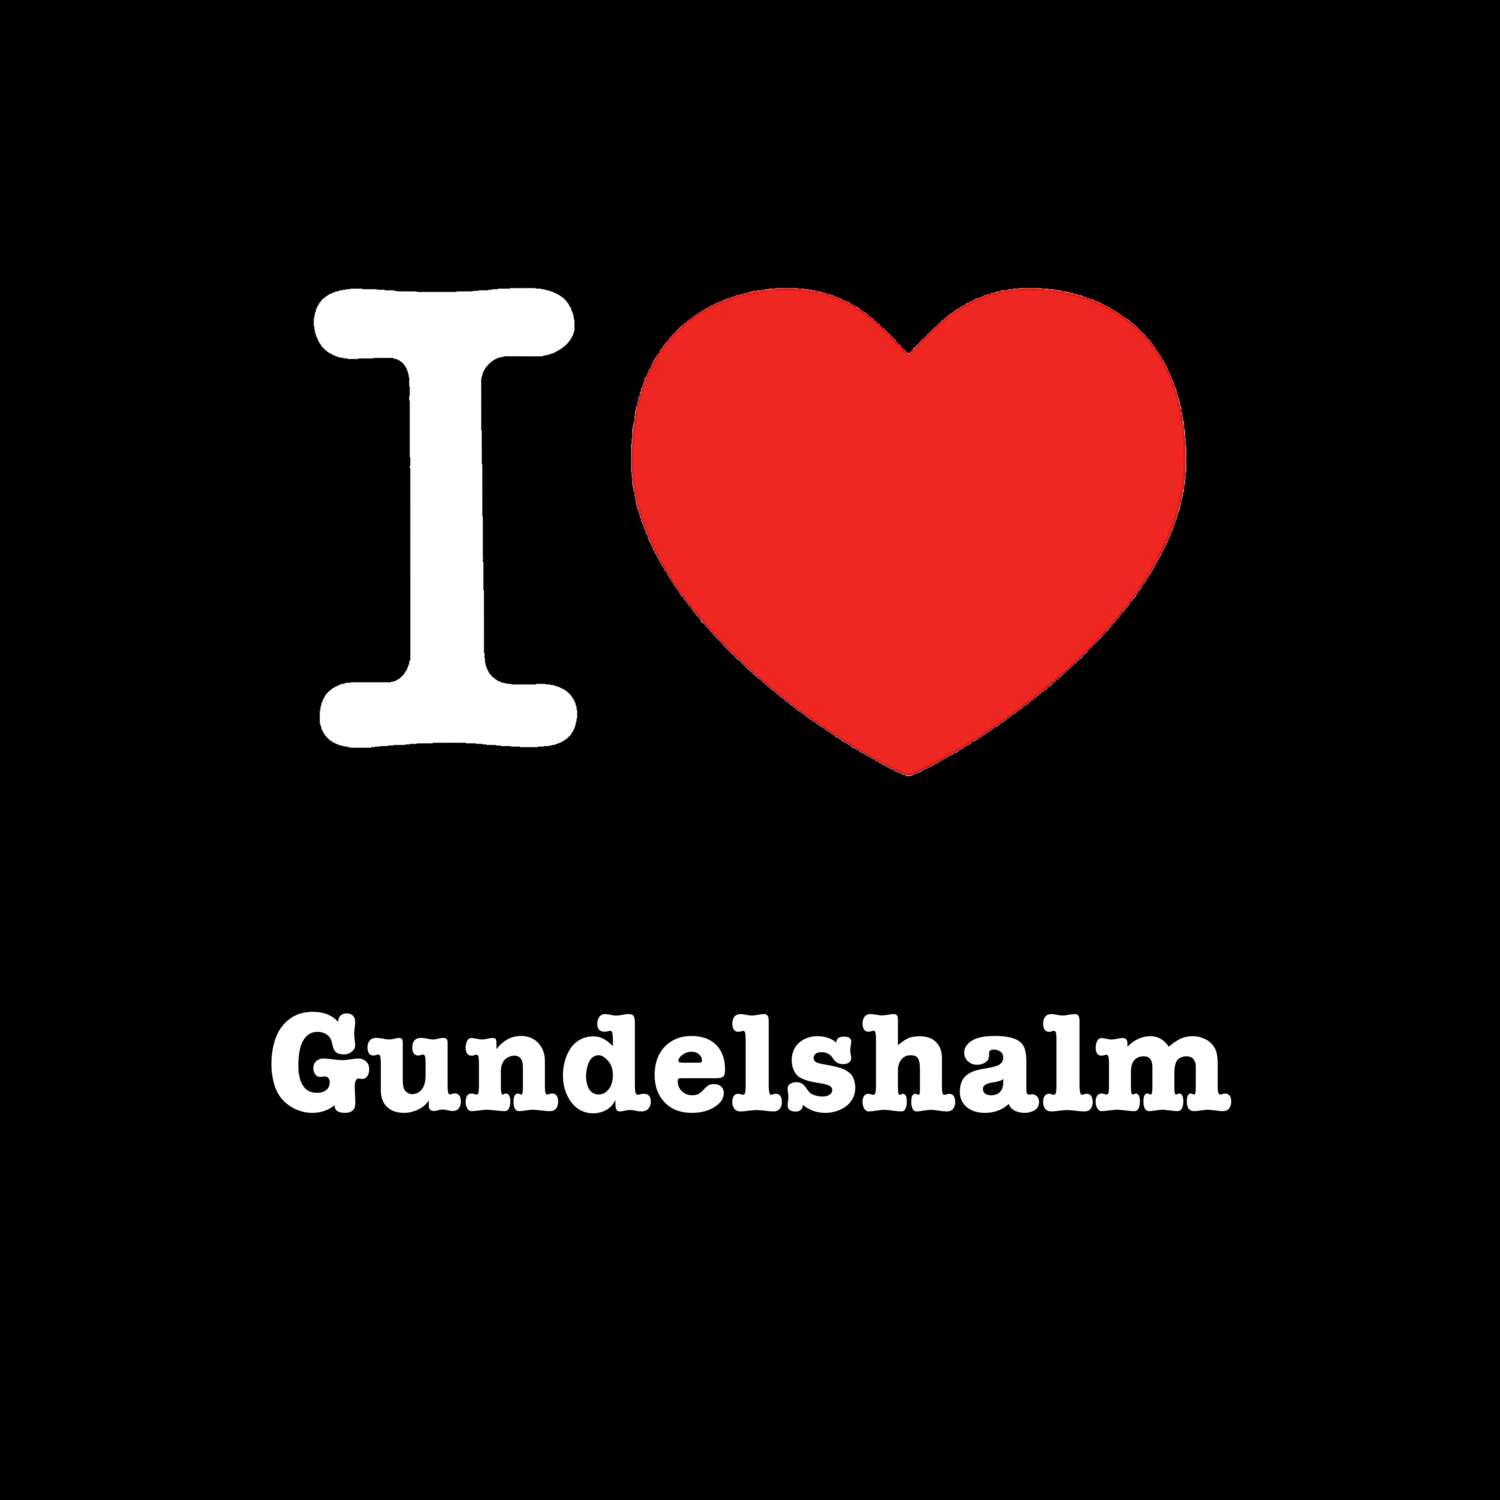 Gundelshalm T-Shirt »I love«